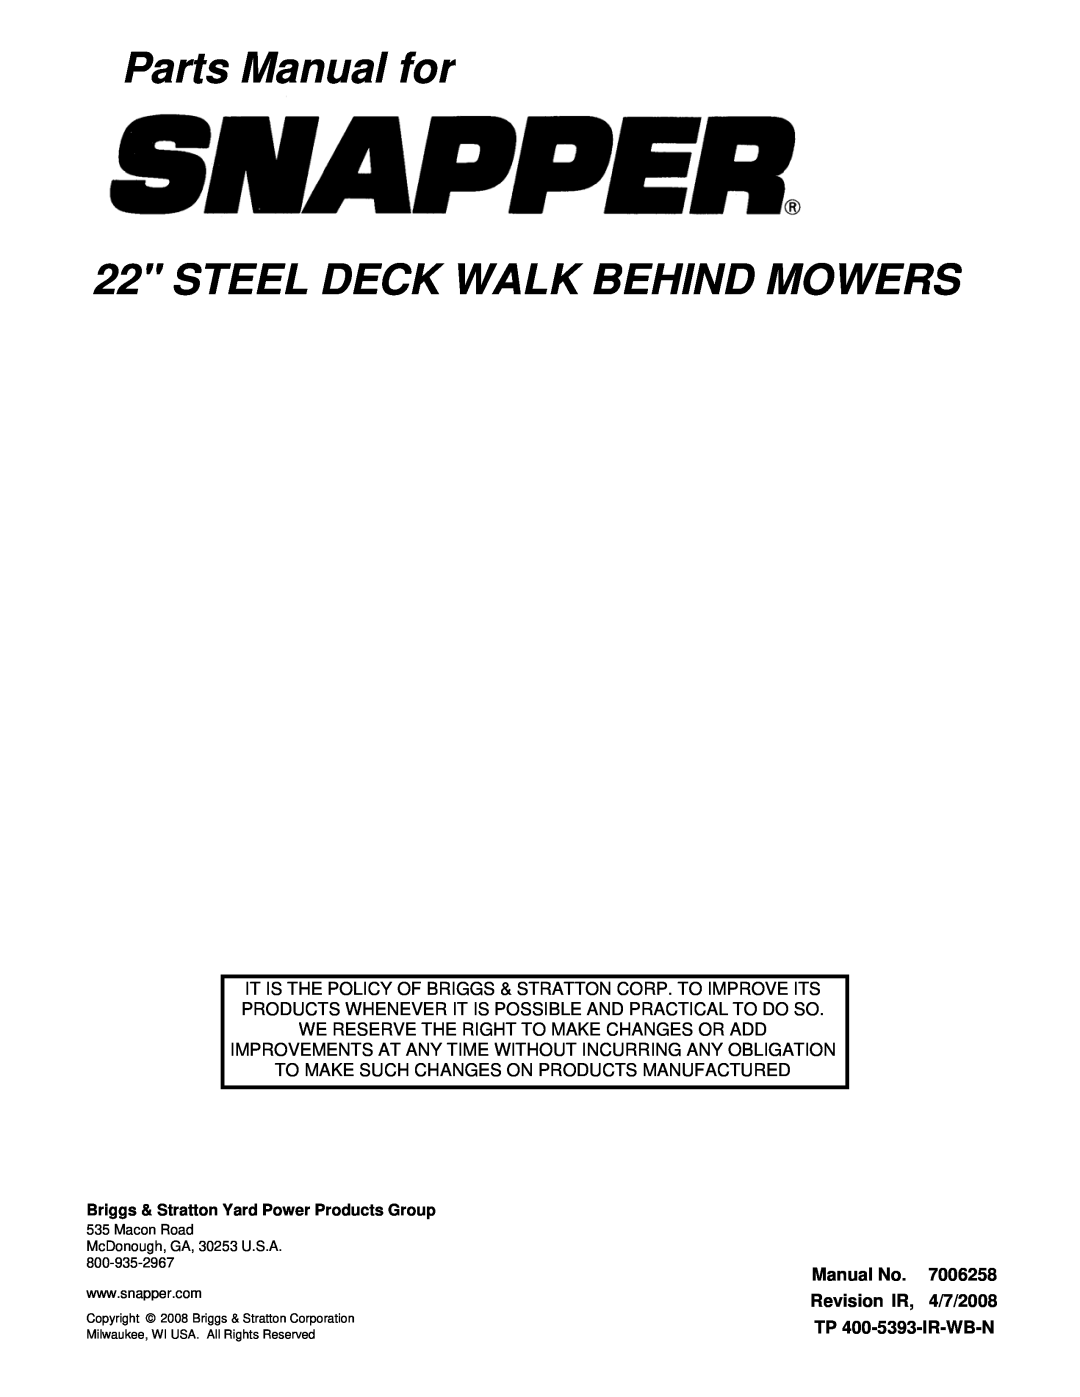 Snapper NS2265 manual Parts Manual for 22 STEEL DECK WALK BEHIND MOWERS, Manual No, 7006258, Revision IR, 4/7/2008 